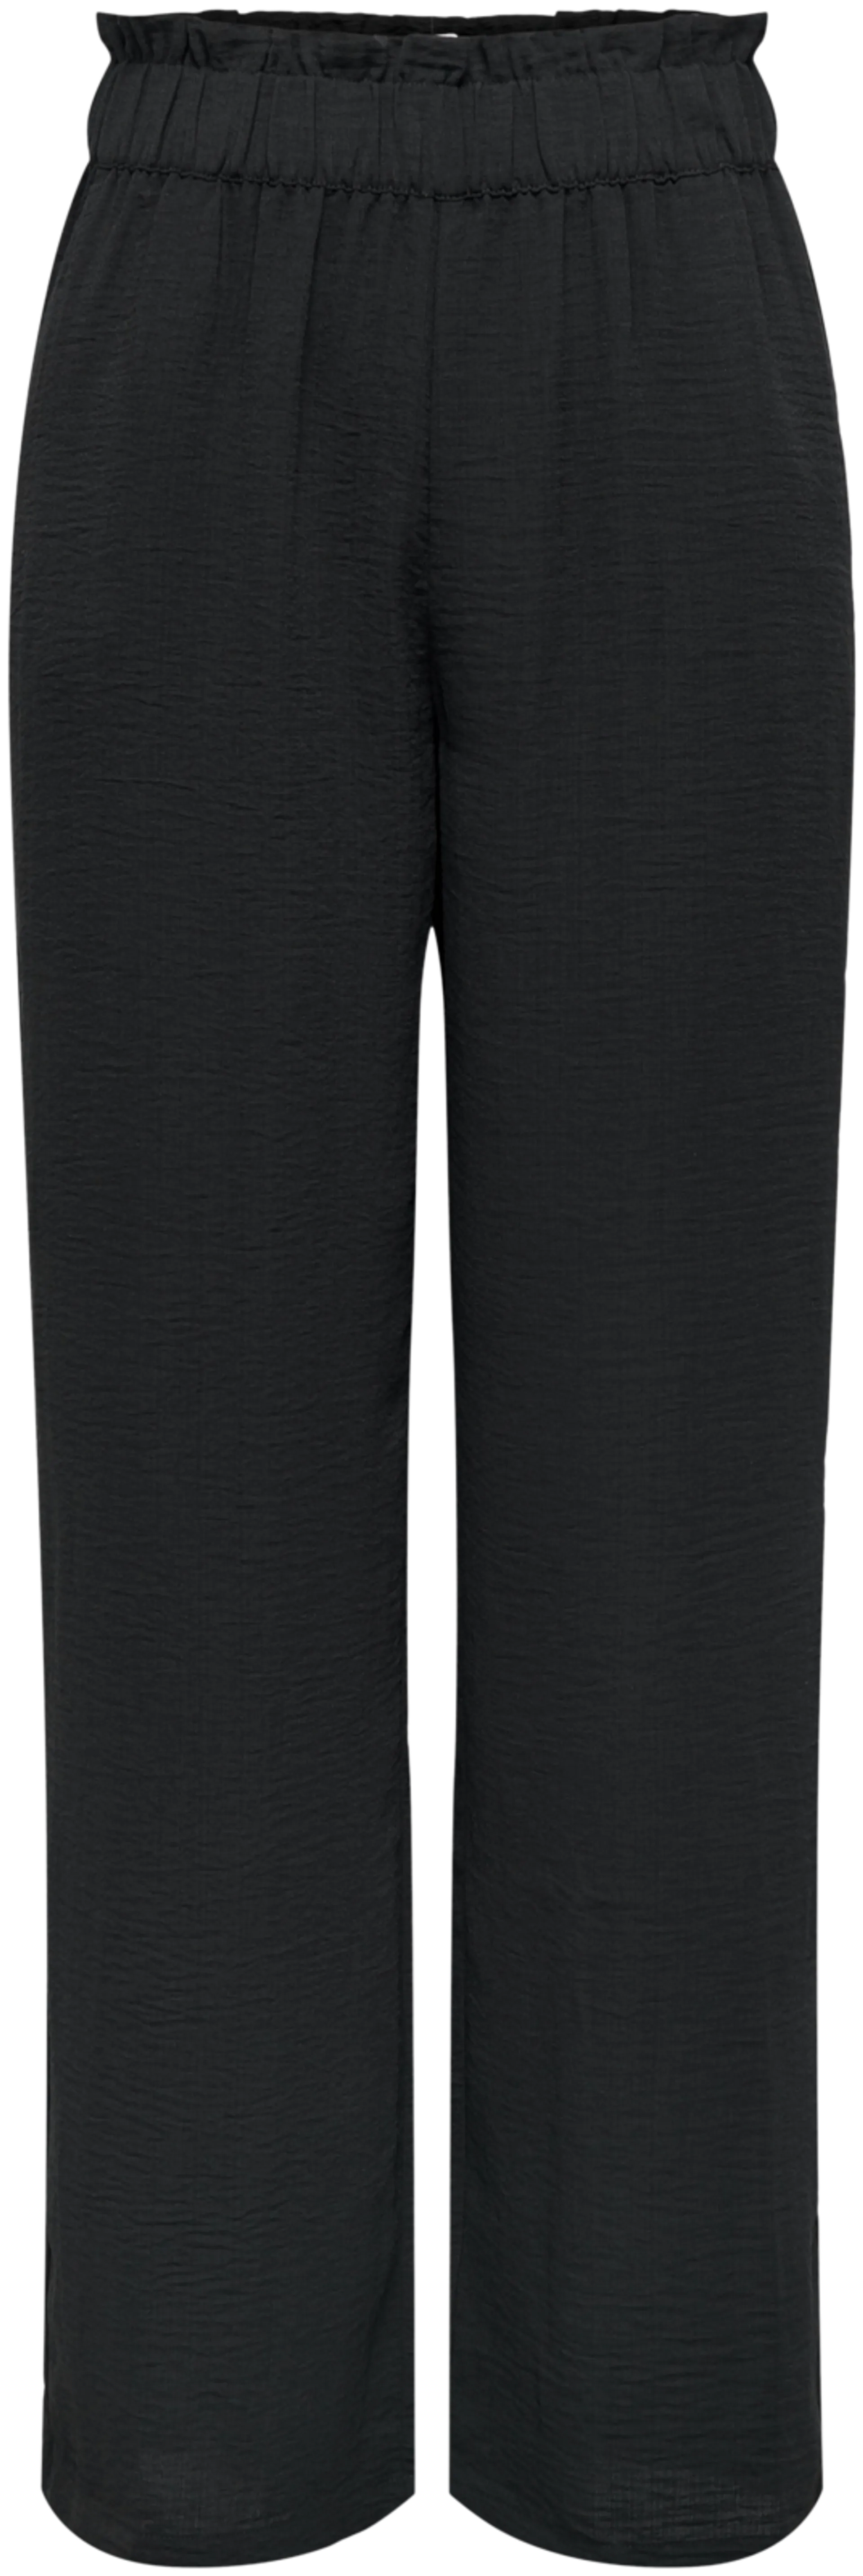 JDY naisten housut Divya - BLACK - 1